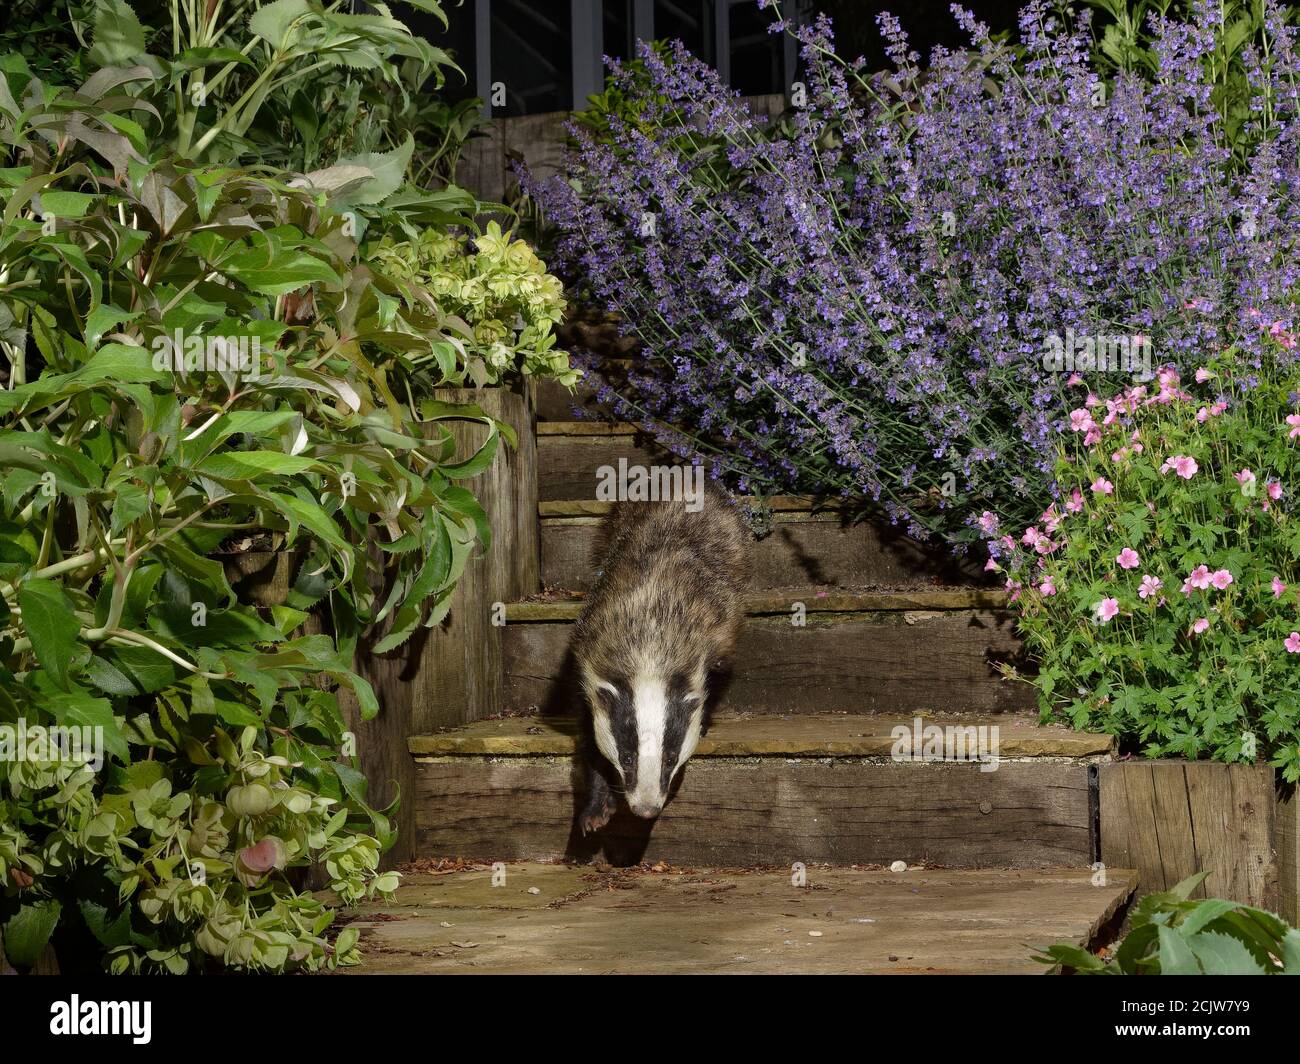 European badger (Meles meles) walking down garden steps at night, past flowering plants, June 2020 (during Coronavirus lockdown period). Stock Photo